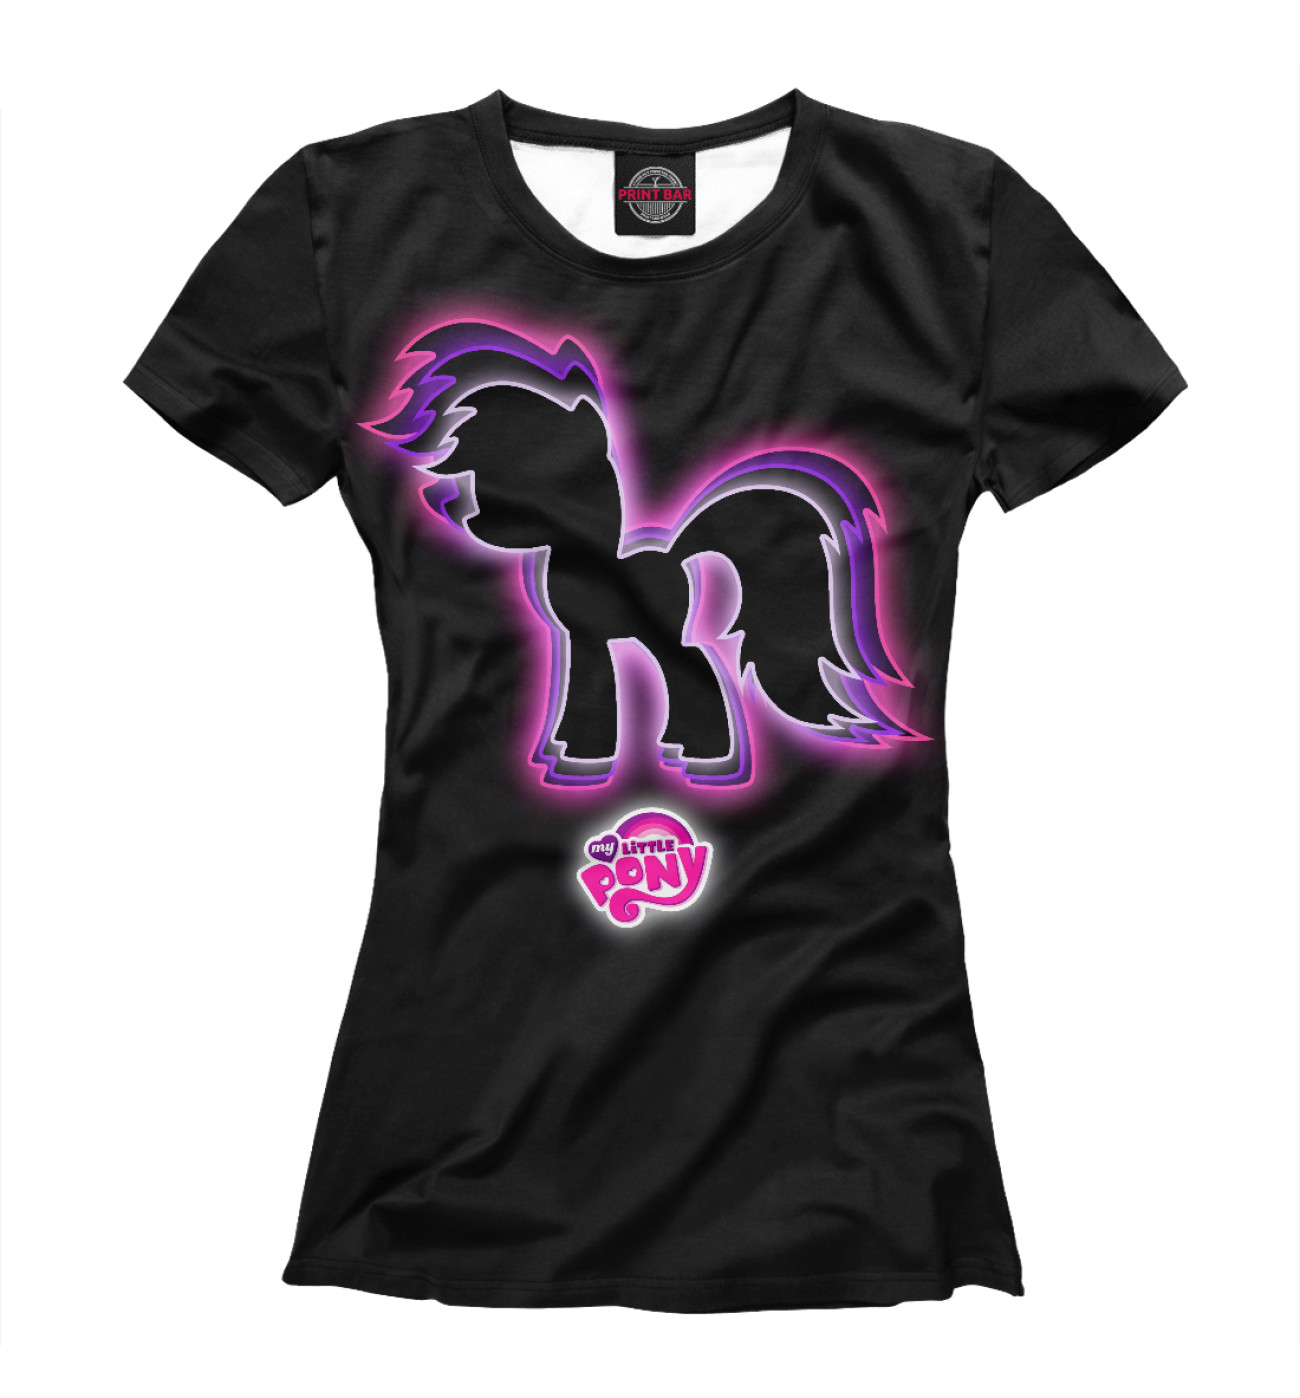 Женская Футболка Pony, артикул: MLP-691899-fut-1